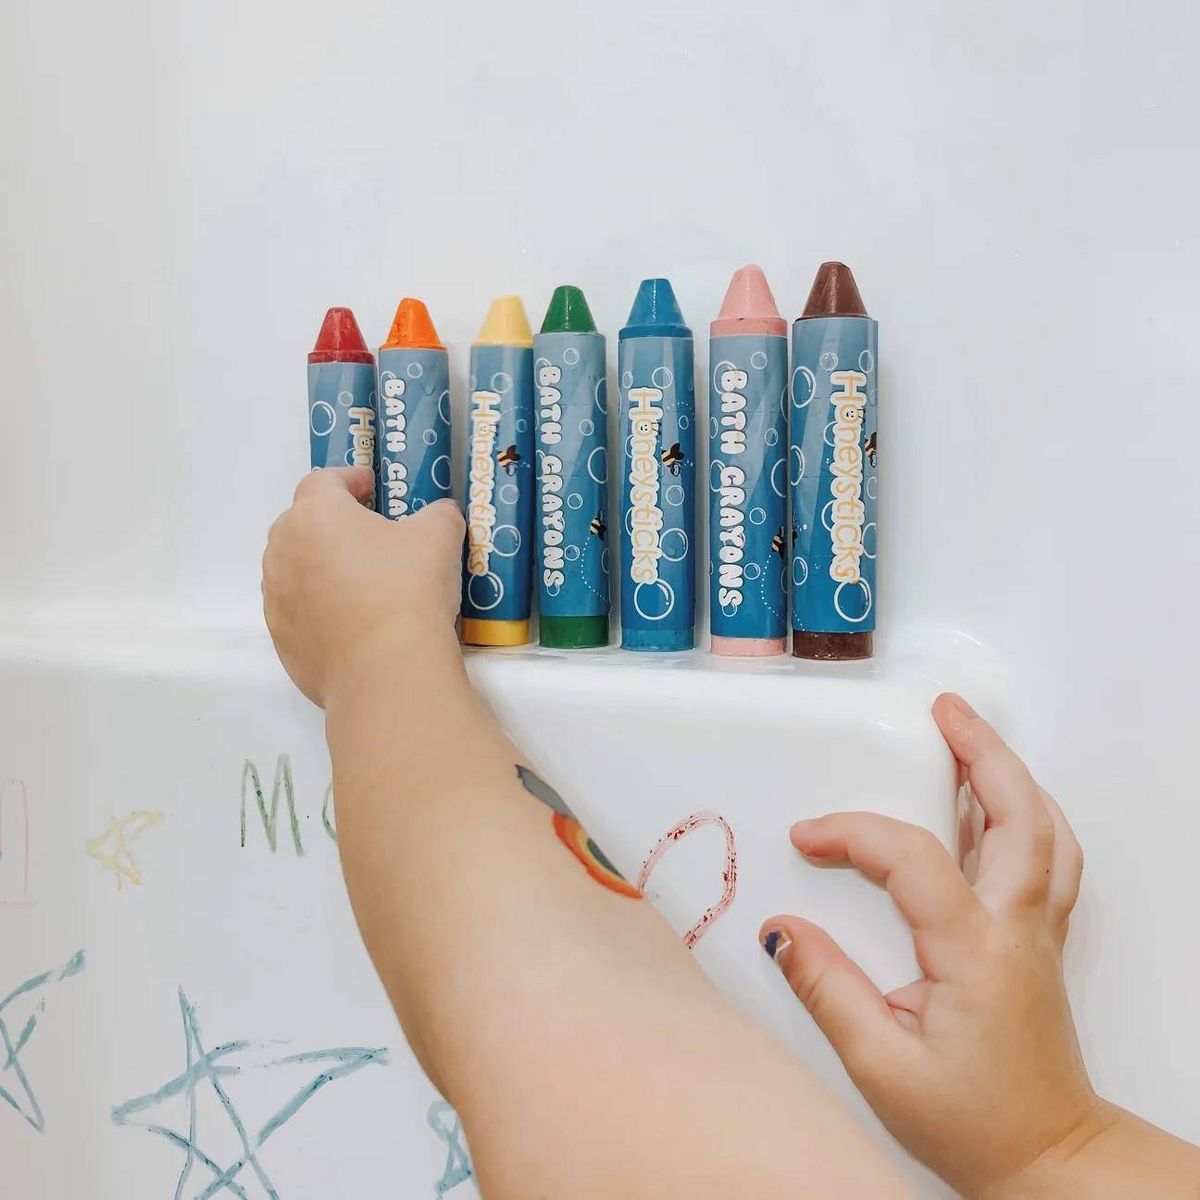 Honeysticks 7ct Easy-Grip Bath Crayons | Target